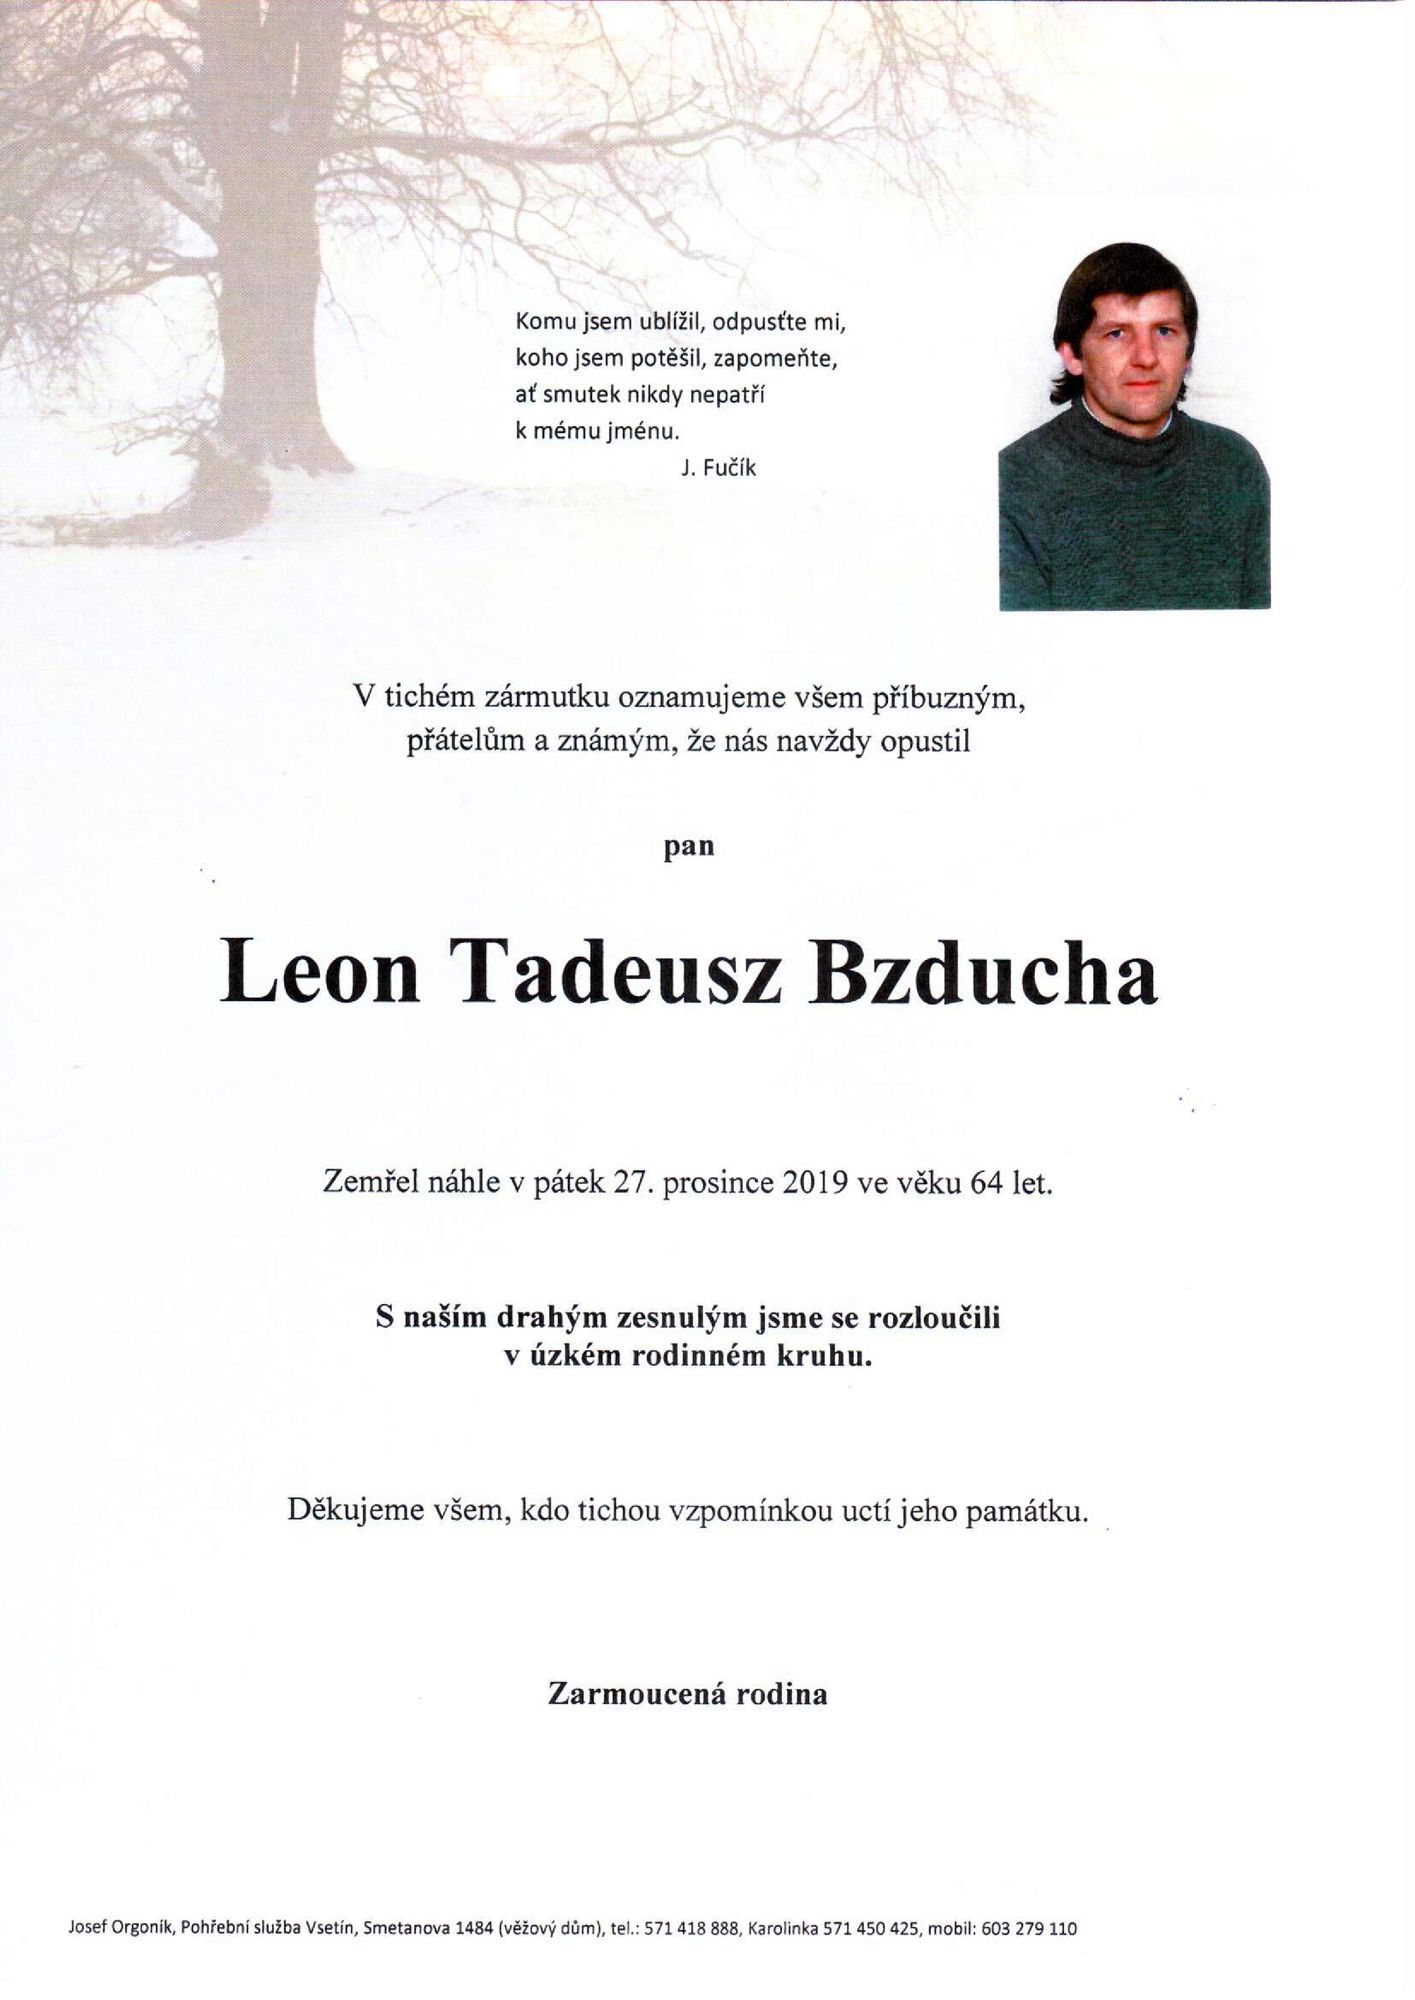 Leon Tadeusz Bzducha